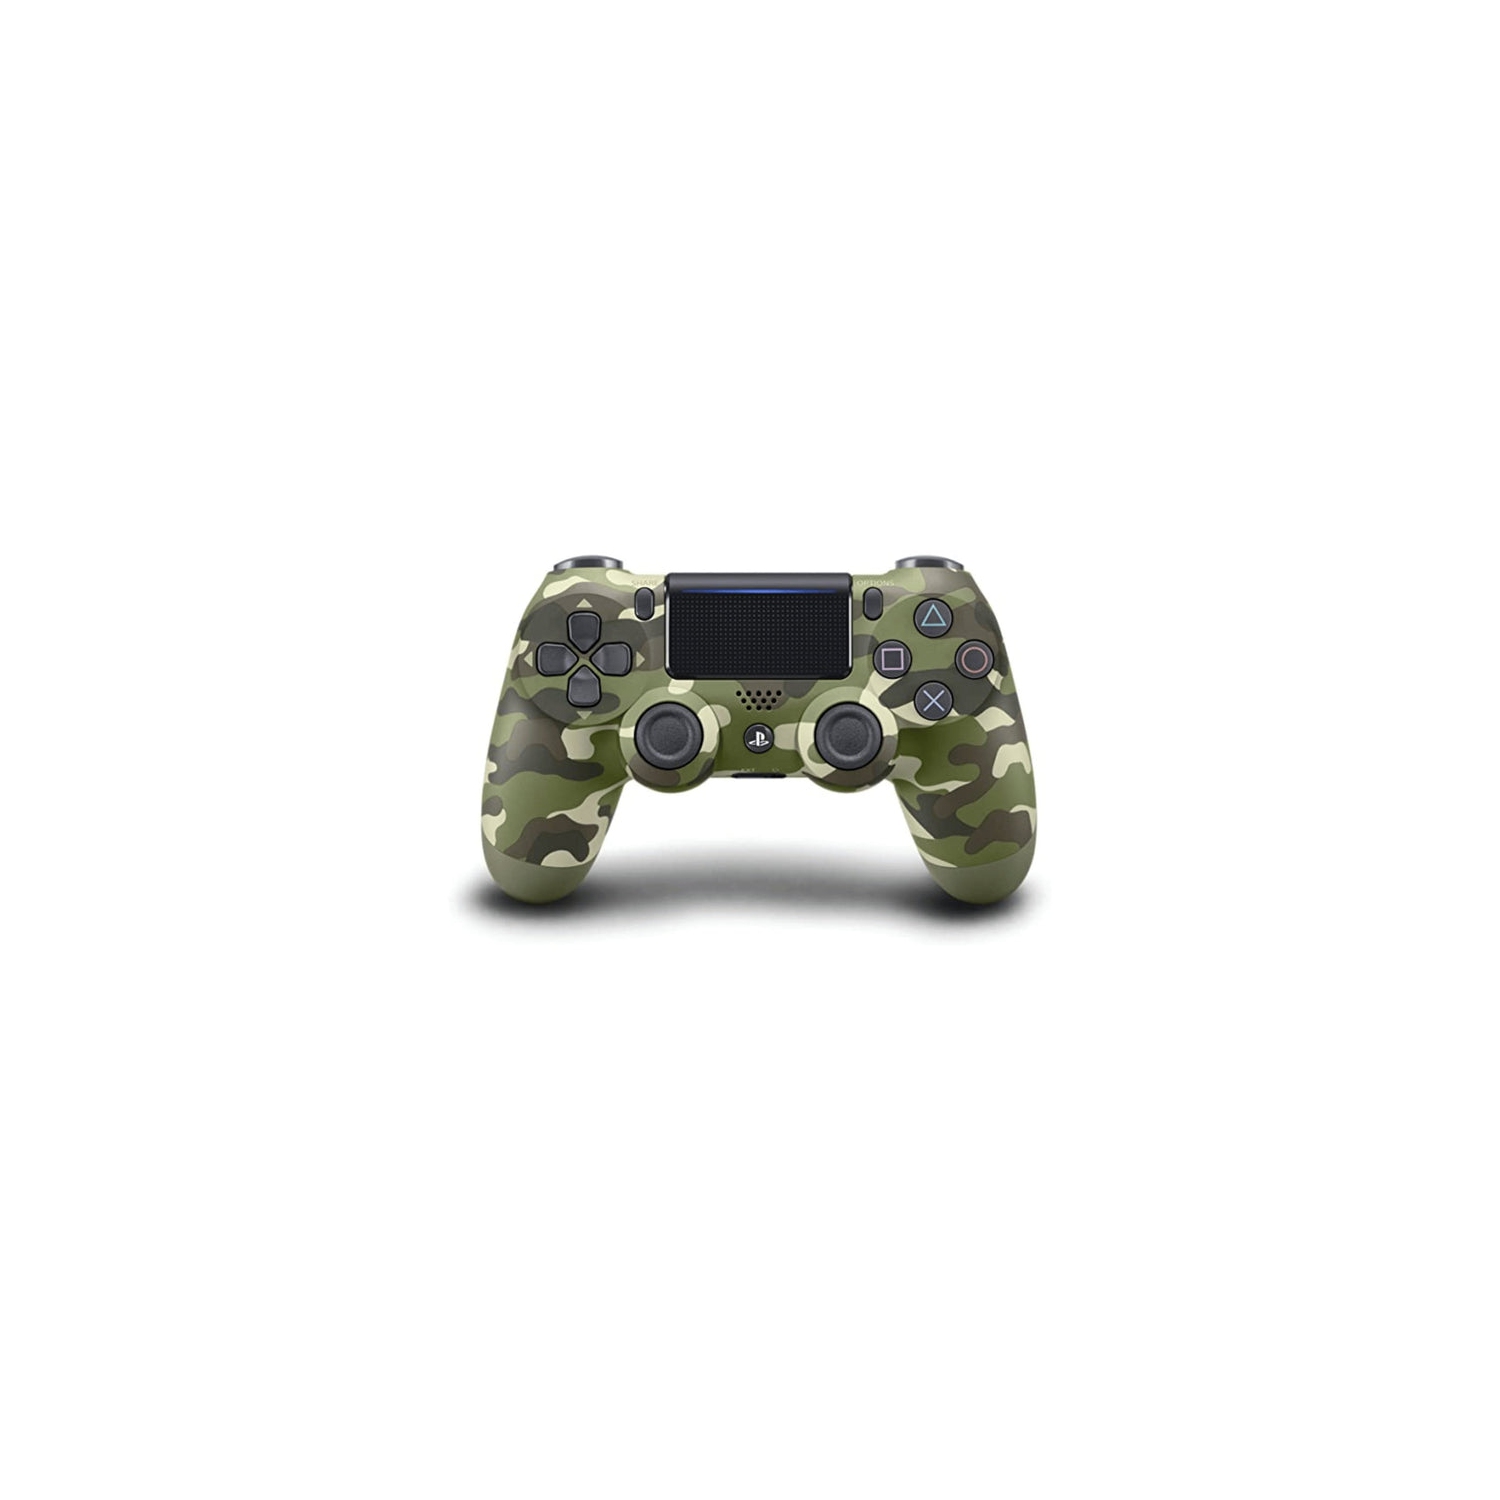 Refurbished (Good) -PlayStation 4 DualShock 4 Wireless Controller - Green Camouflage